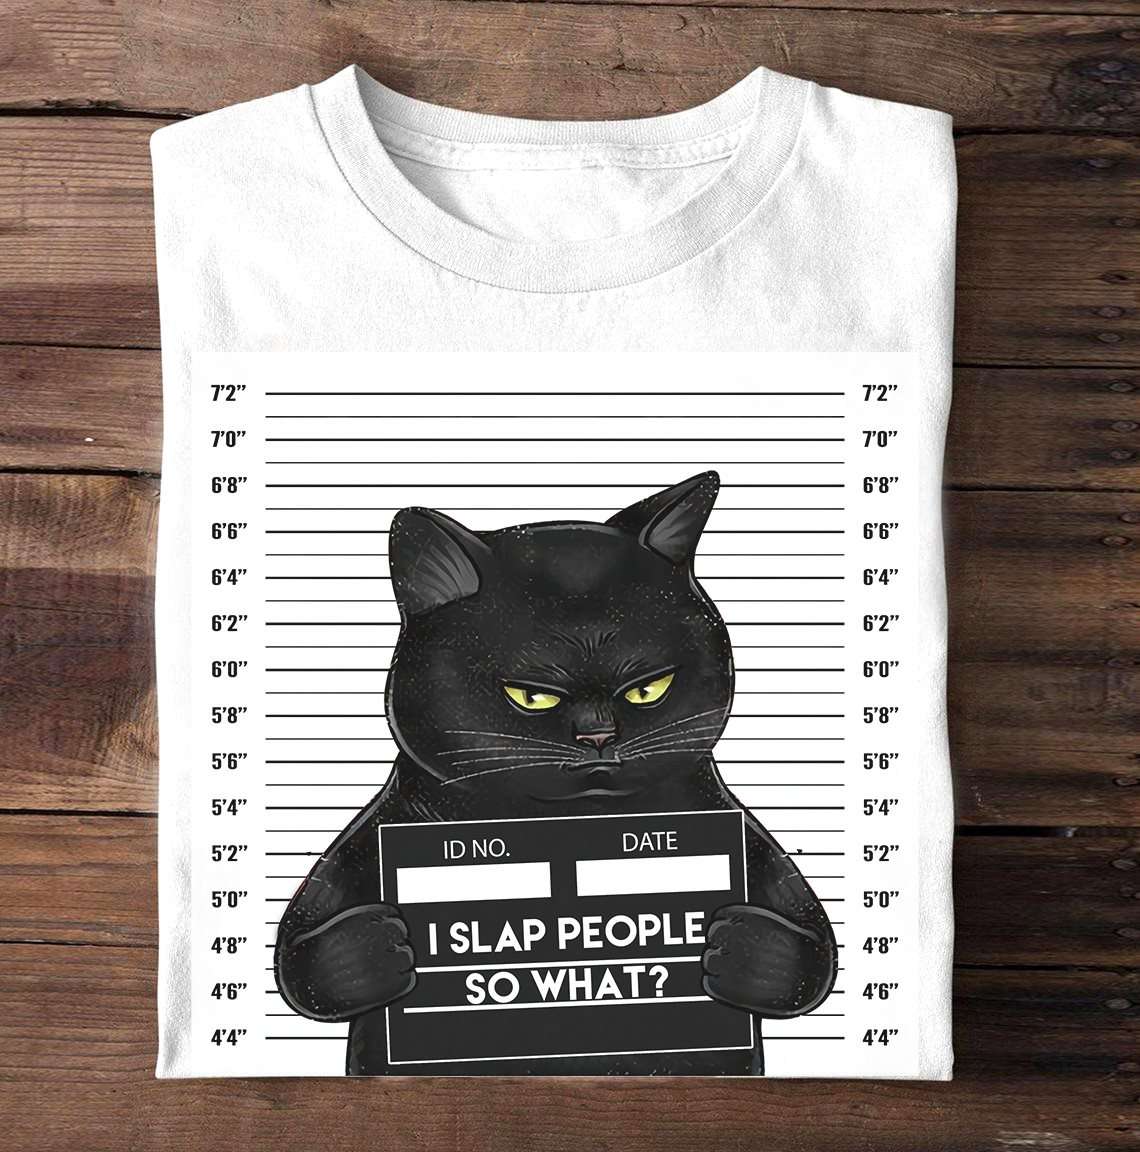 Prisoner Black Cat - I slap people so what?